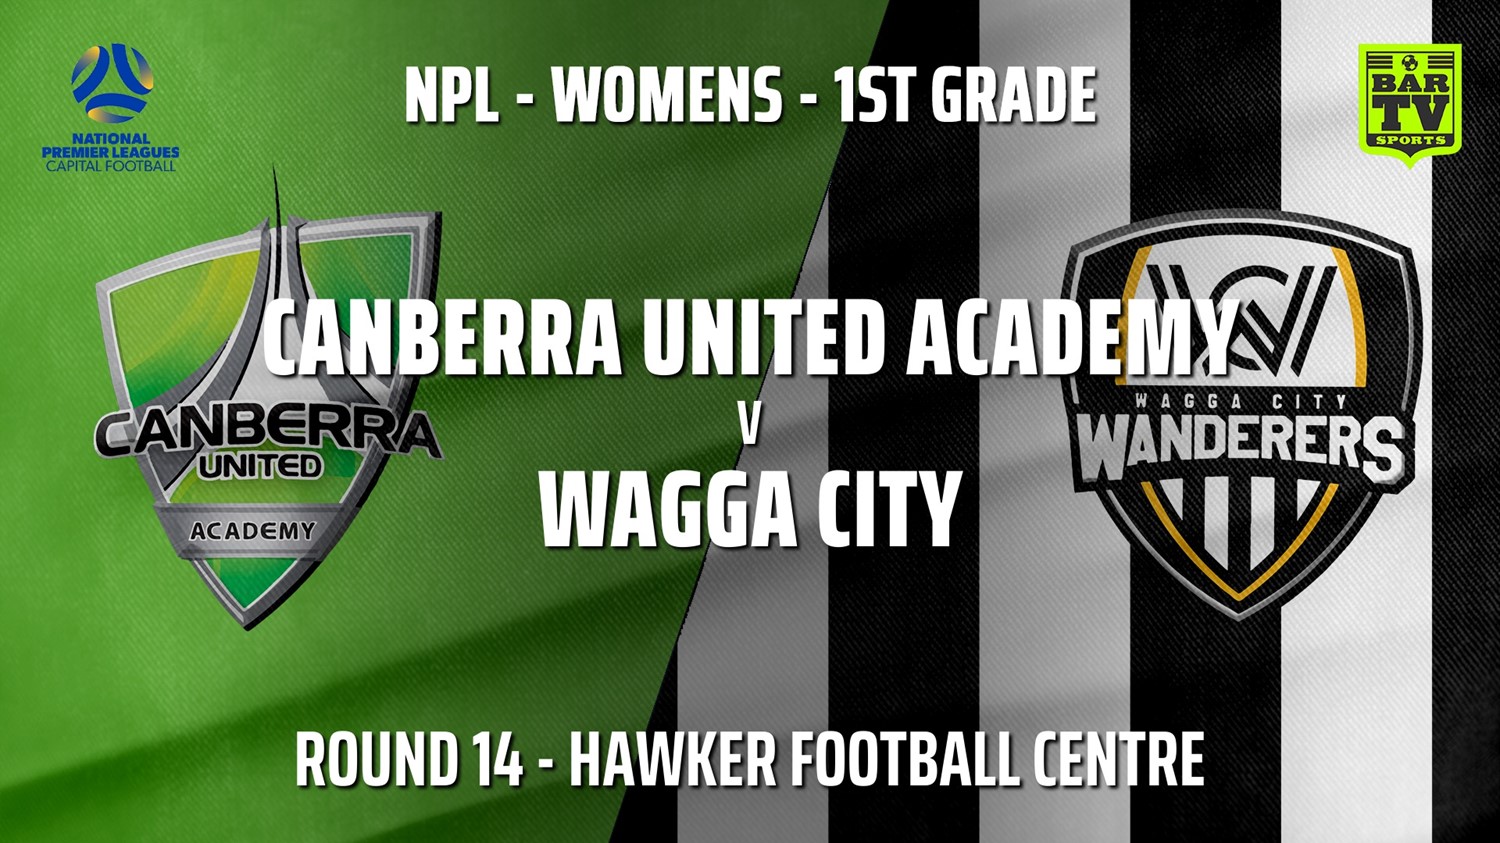 210718-Capital Womens Round 14 - Canberra United Academy v Wagga City Wanderers FC (women) Slate Image